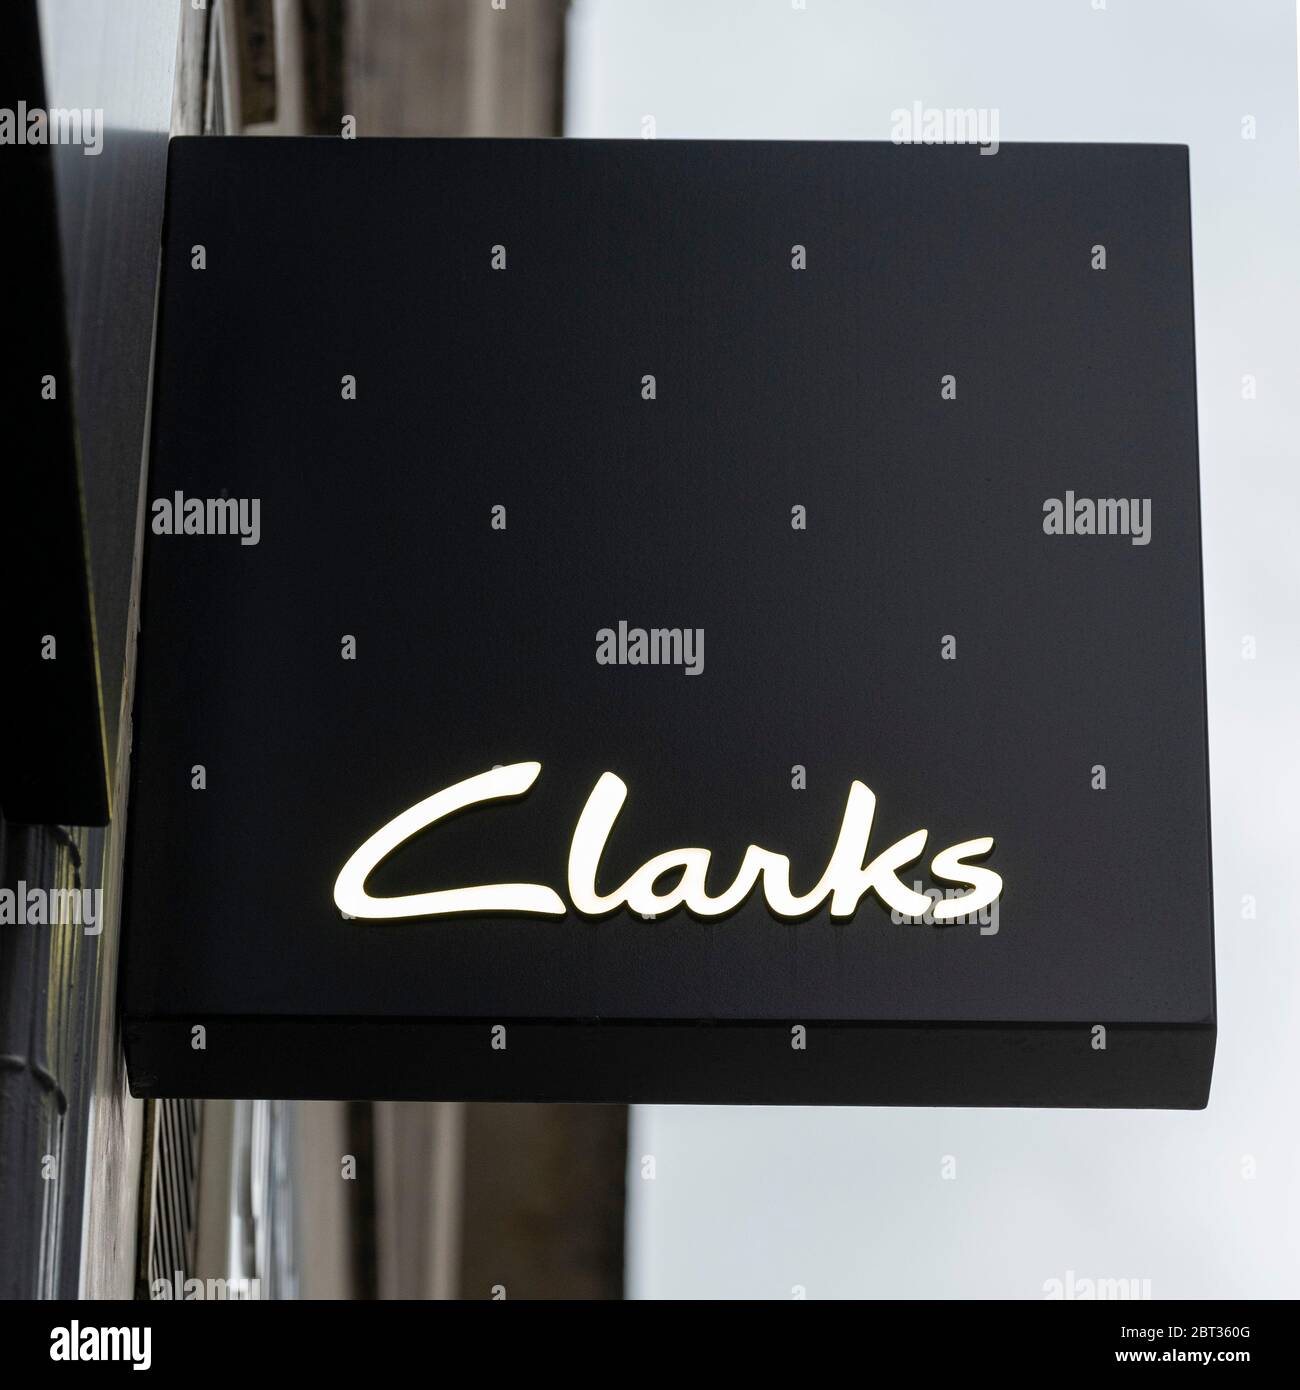 clarks shoes jobs london